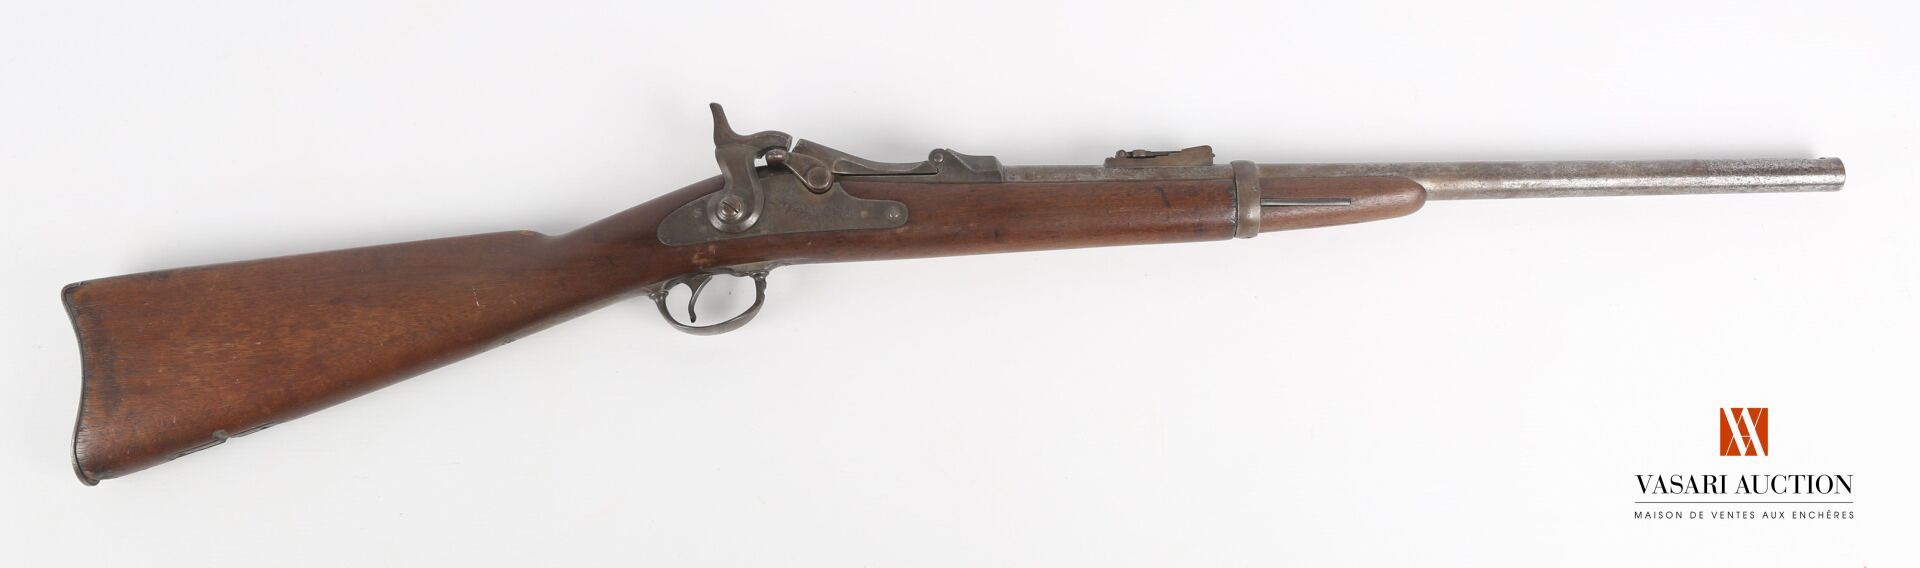 Null Fusil de montura reglamentario SPRINGFIELD modelo 1873, fuego central, cali&hellip;